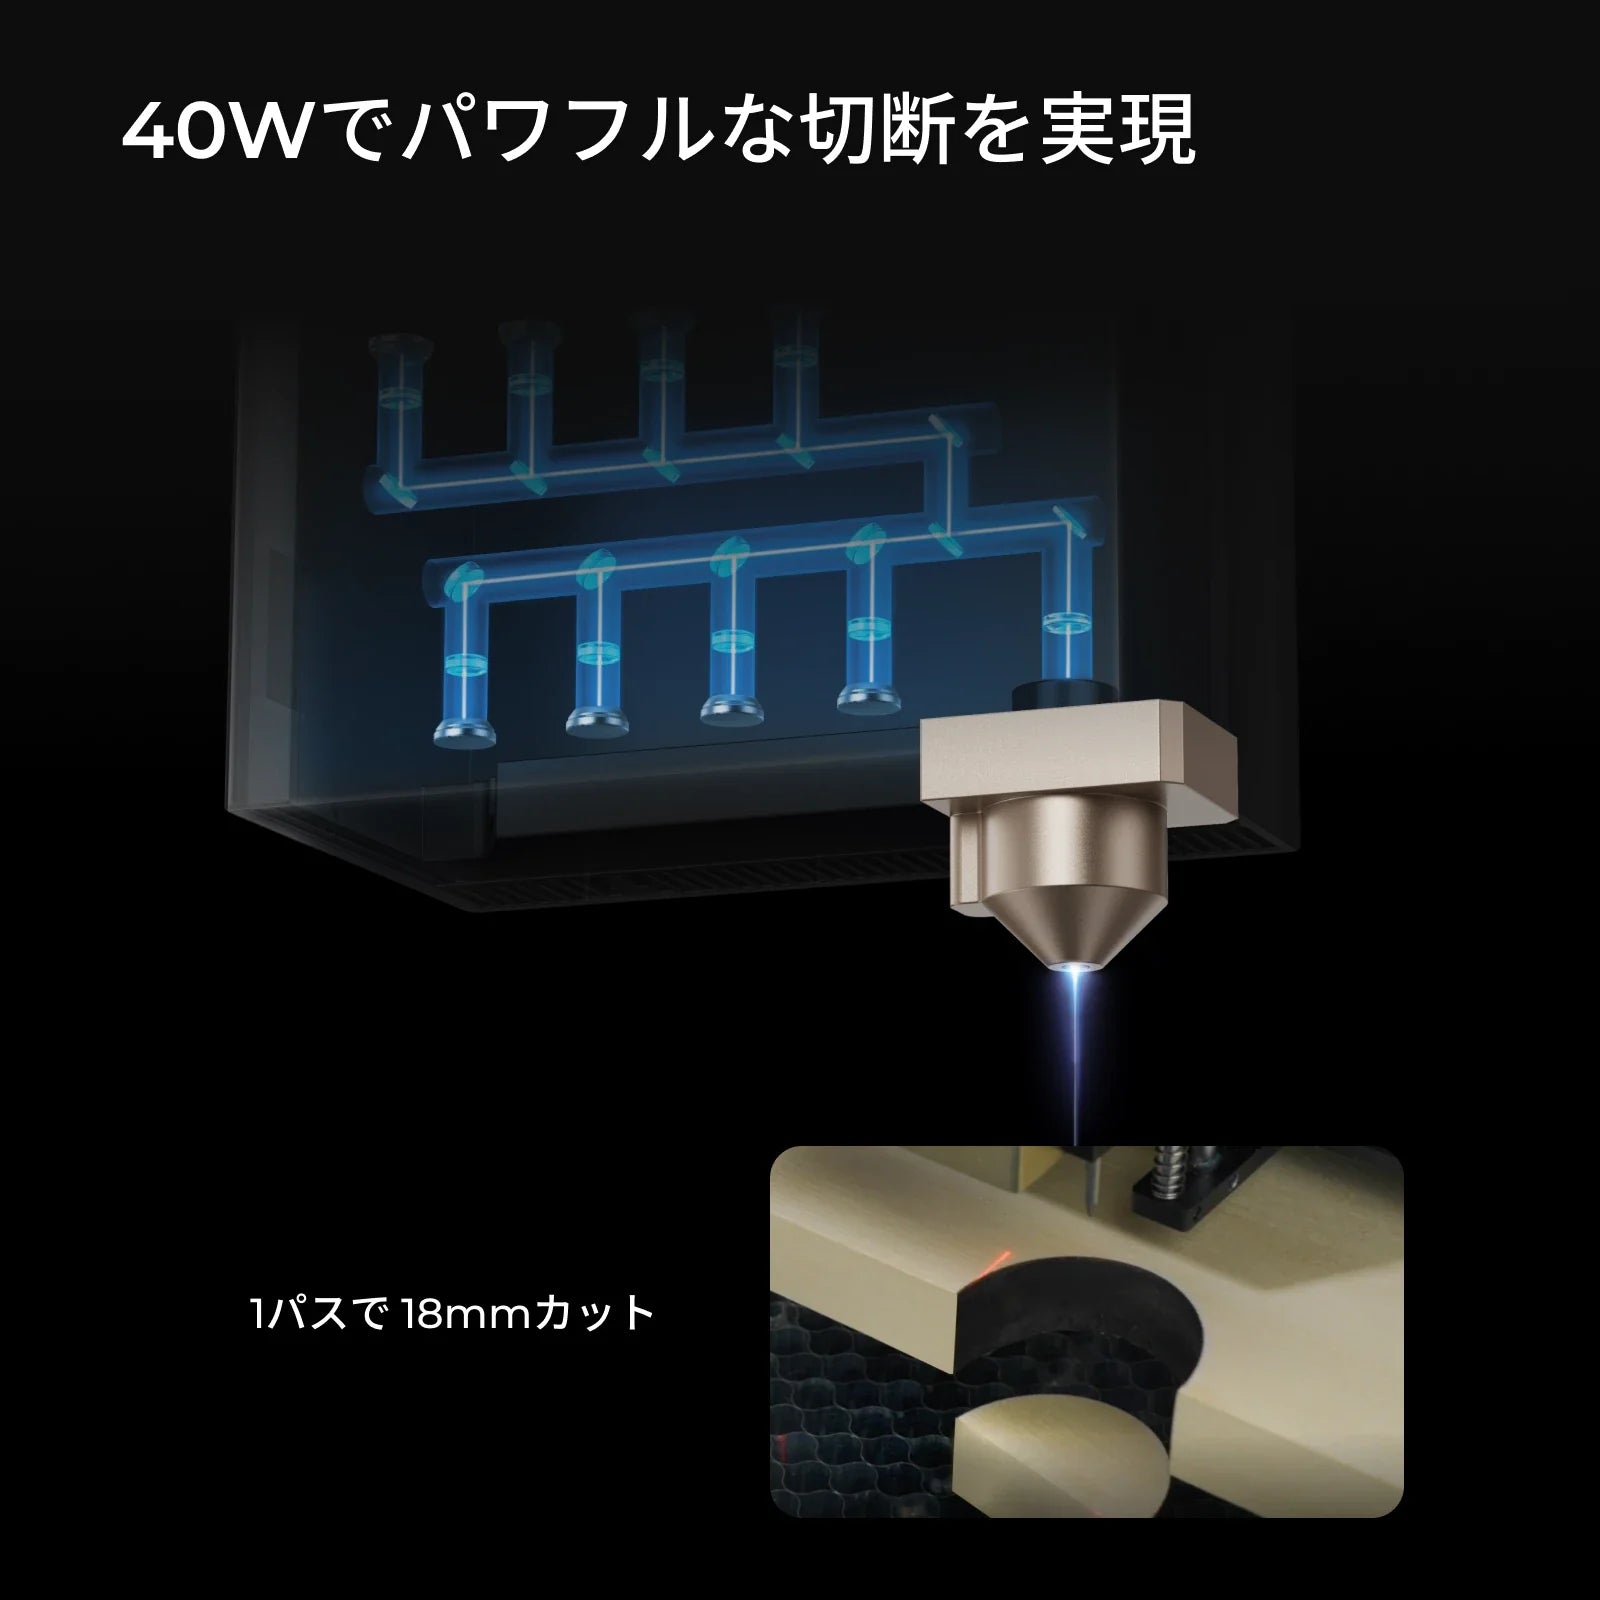 xTool S1 10W密閉型ダイオード レーザー カッター